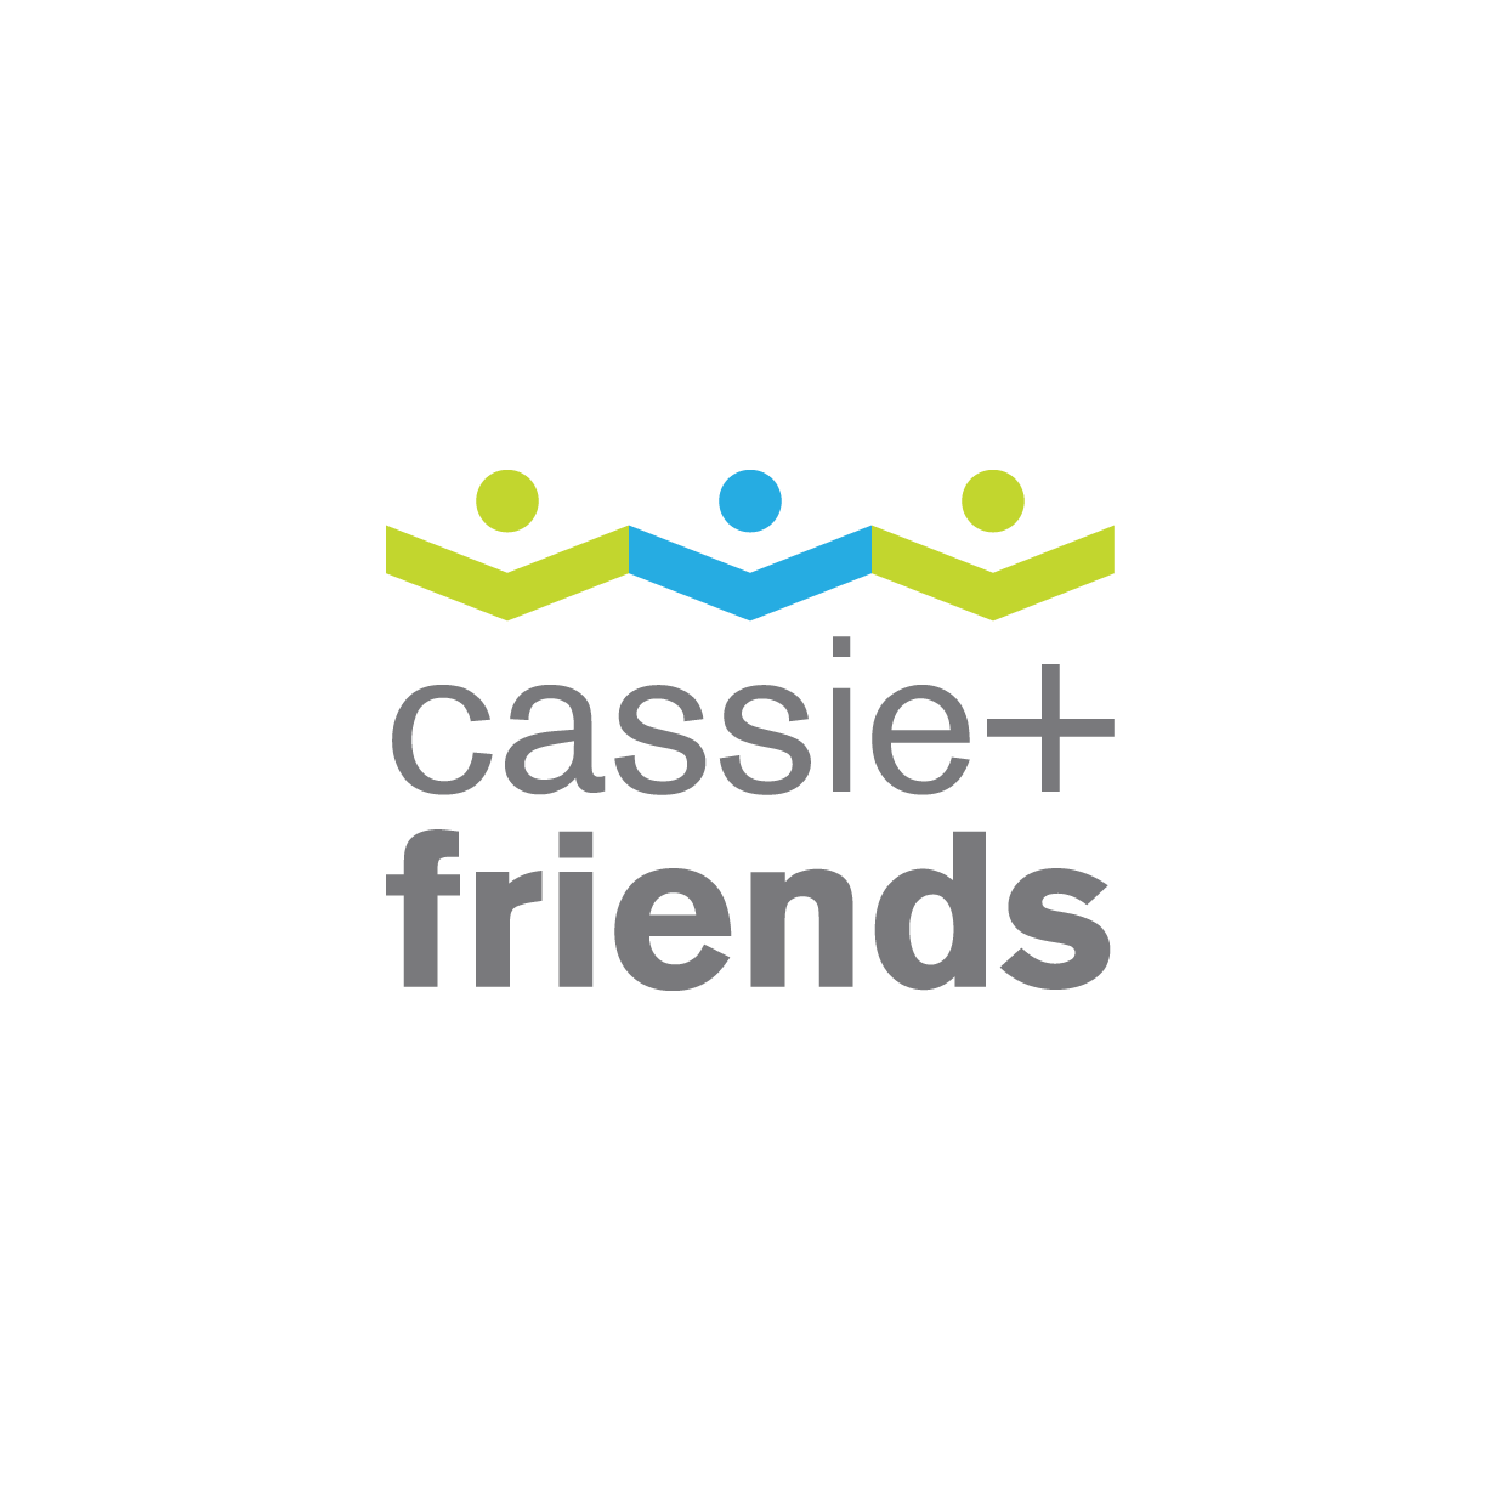 jeneesecreative_cassieandfriends_logo.png